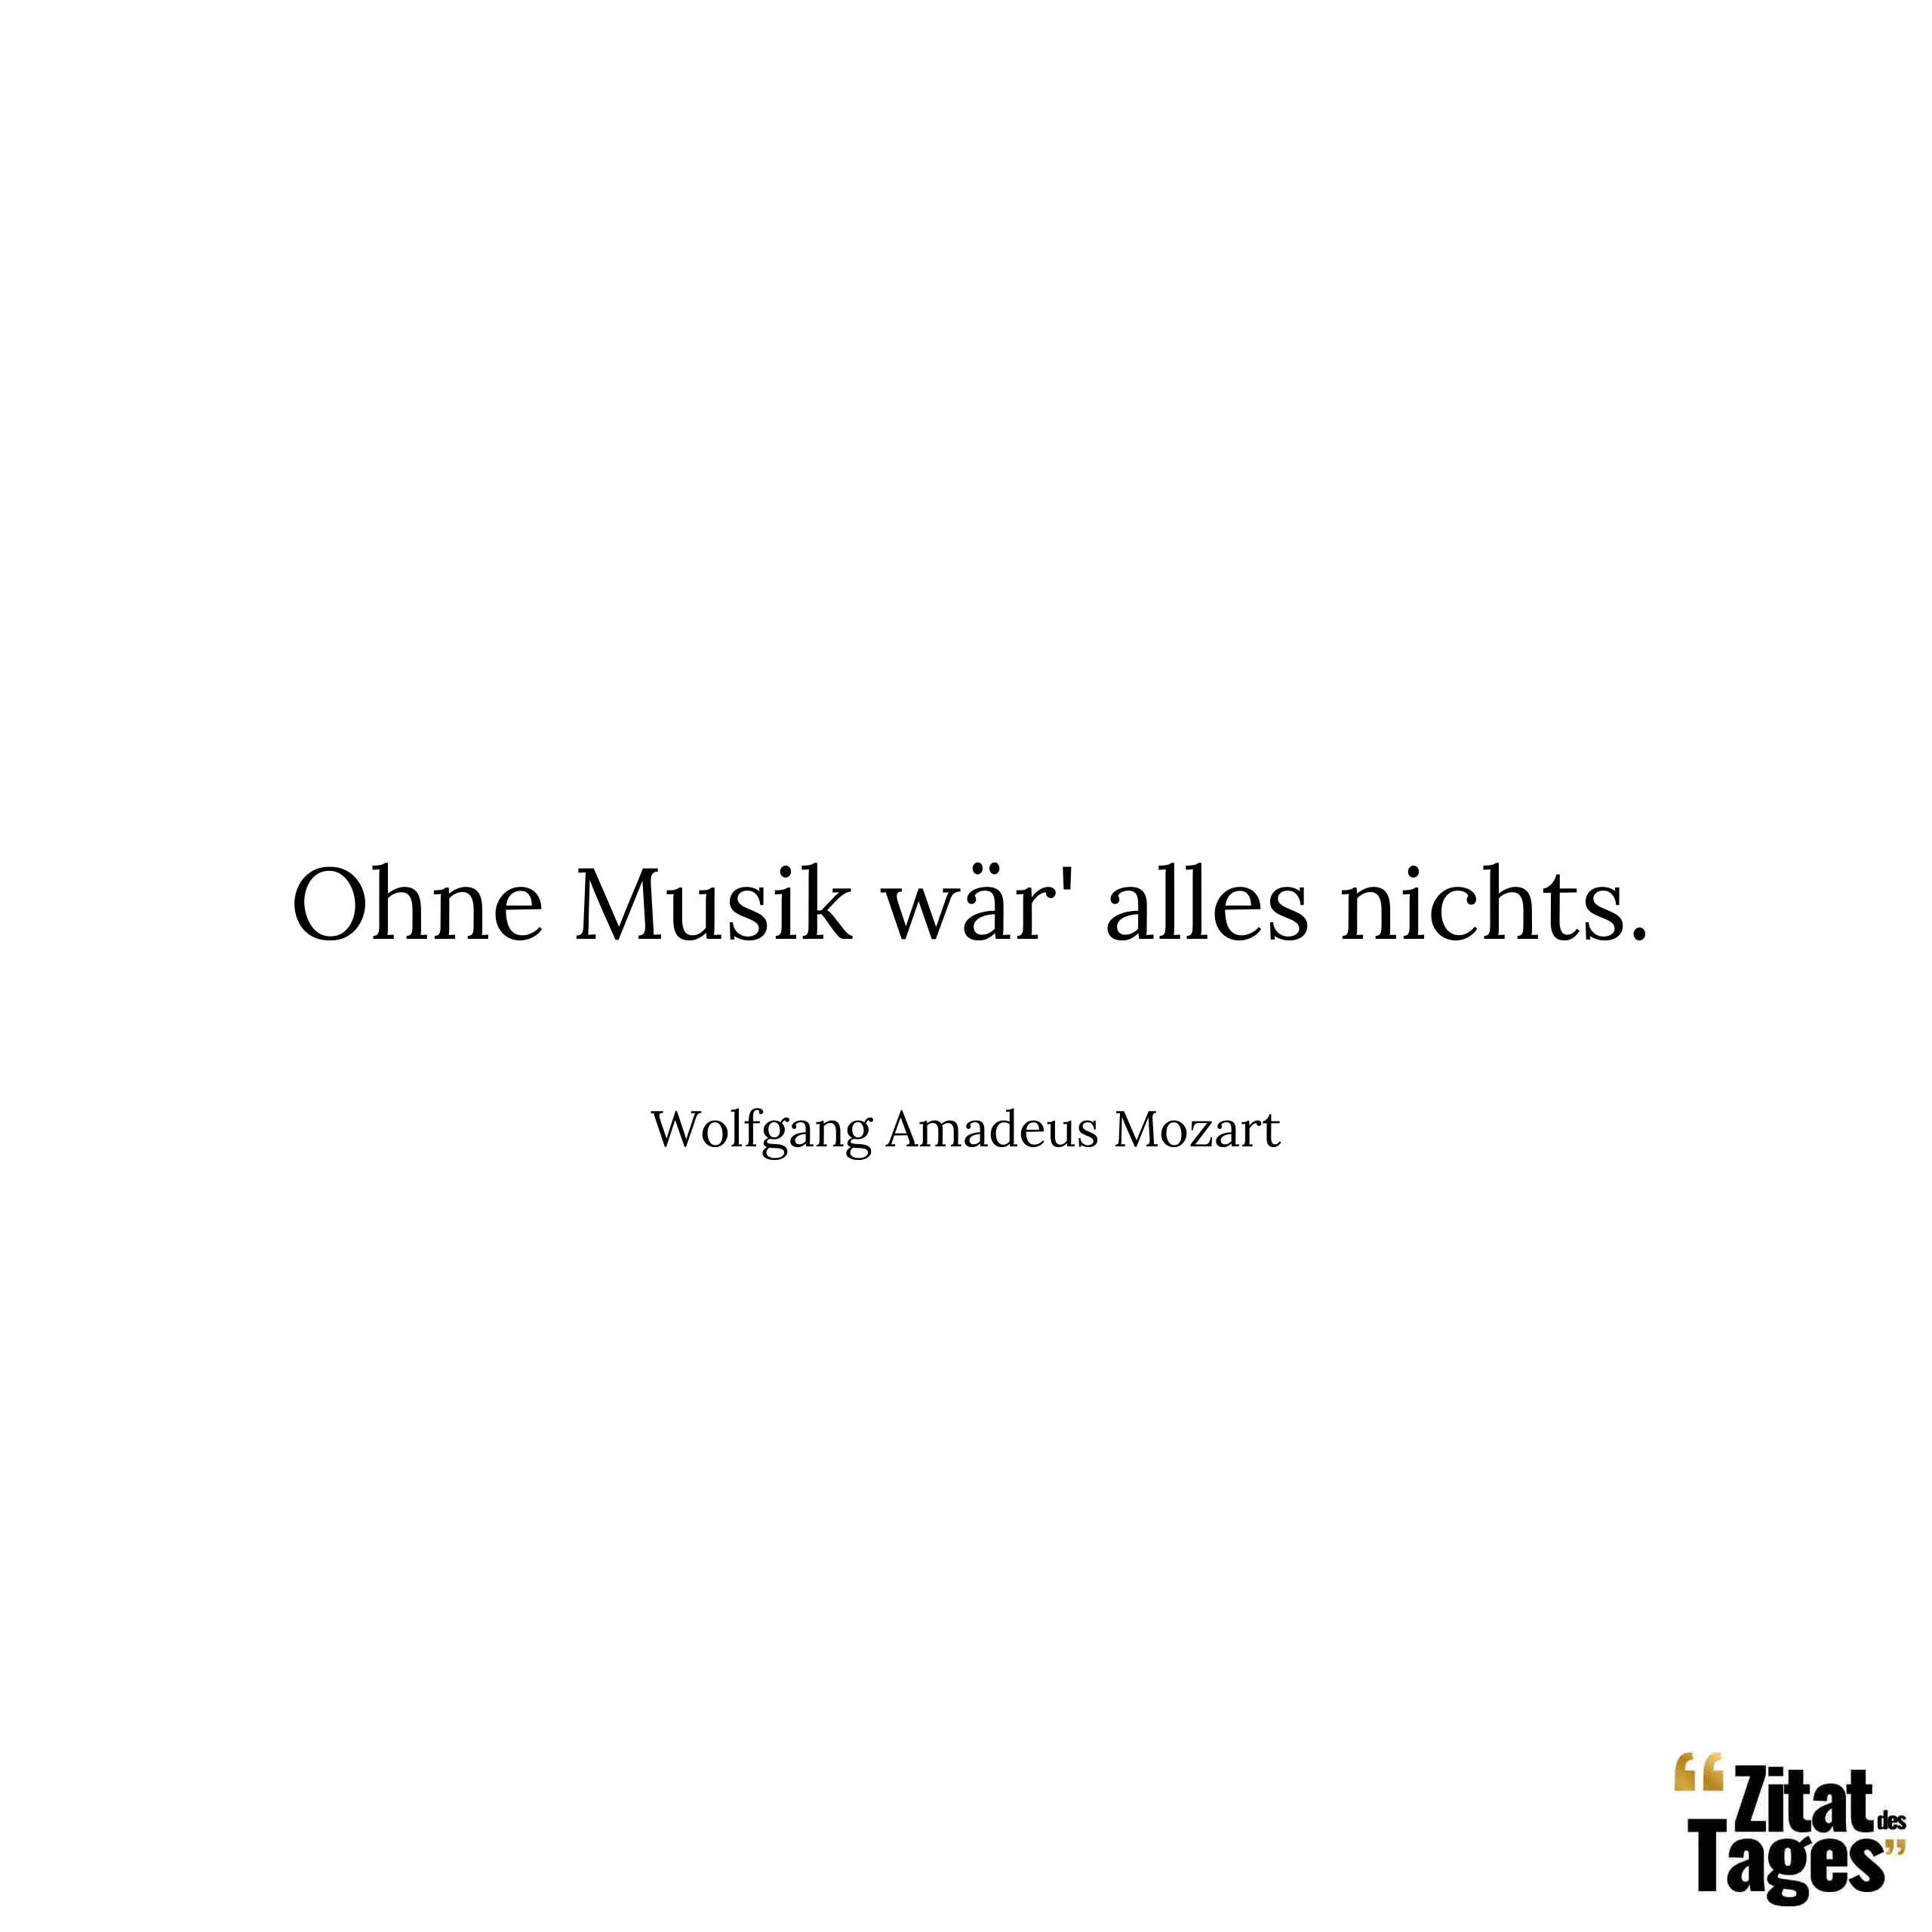 Ohne Musik wär' alles nichts. - Wolfgang Amadeus Mozart